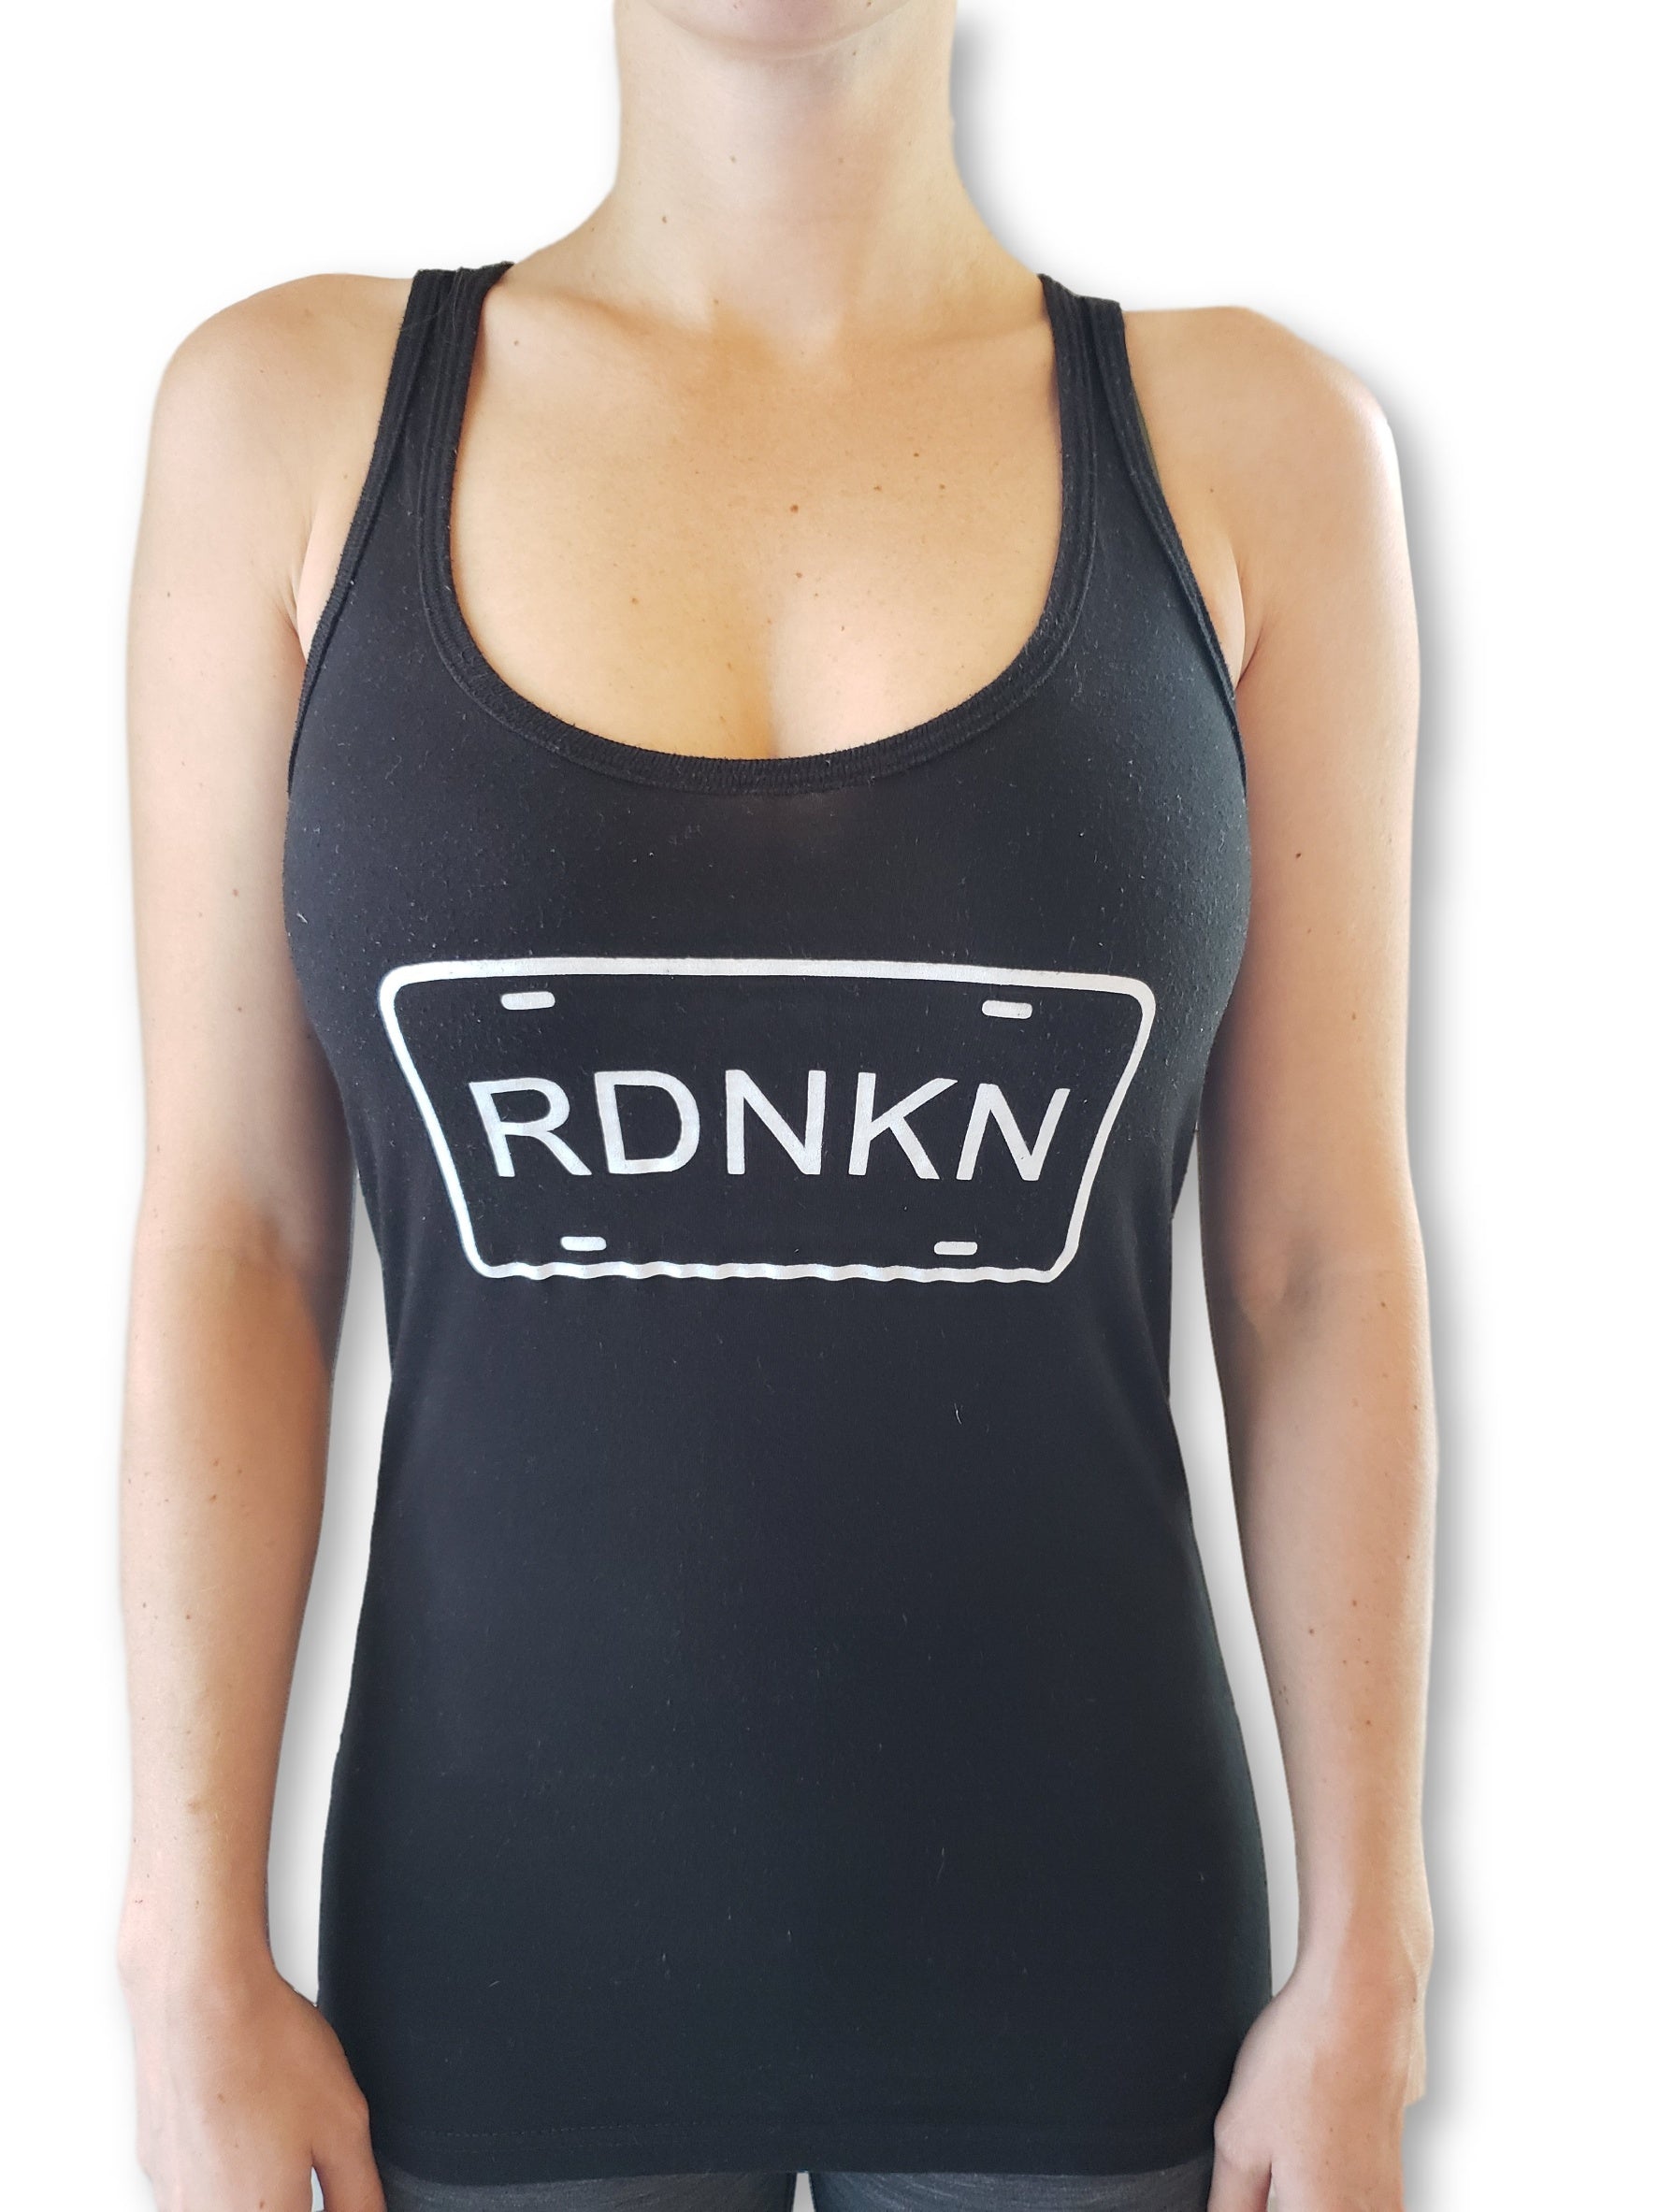 Womens RDNKN Racerback Tank - rdnkn.ca